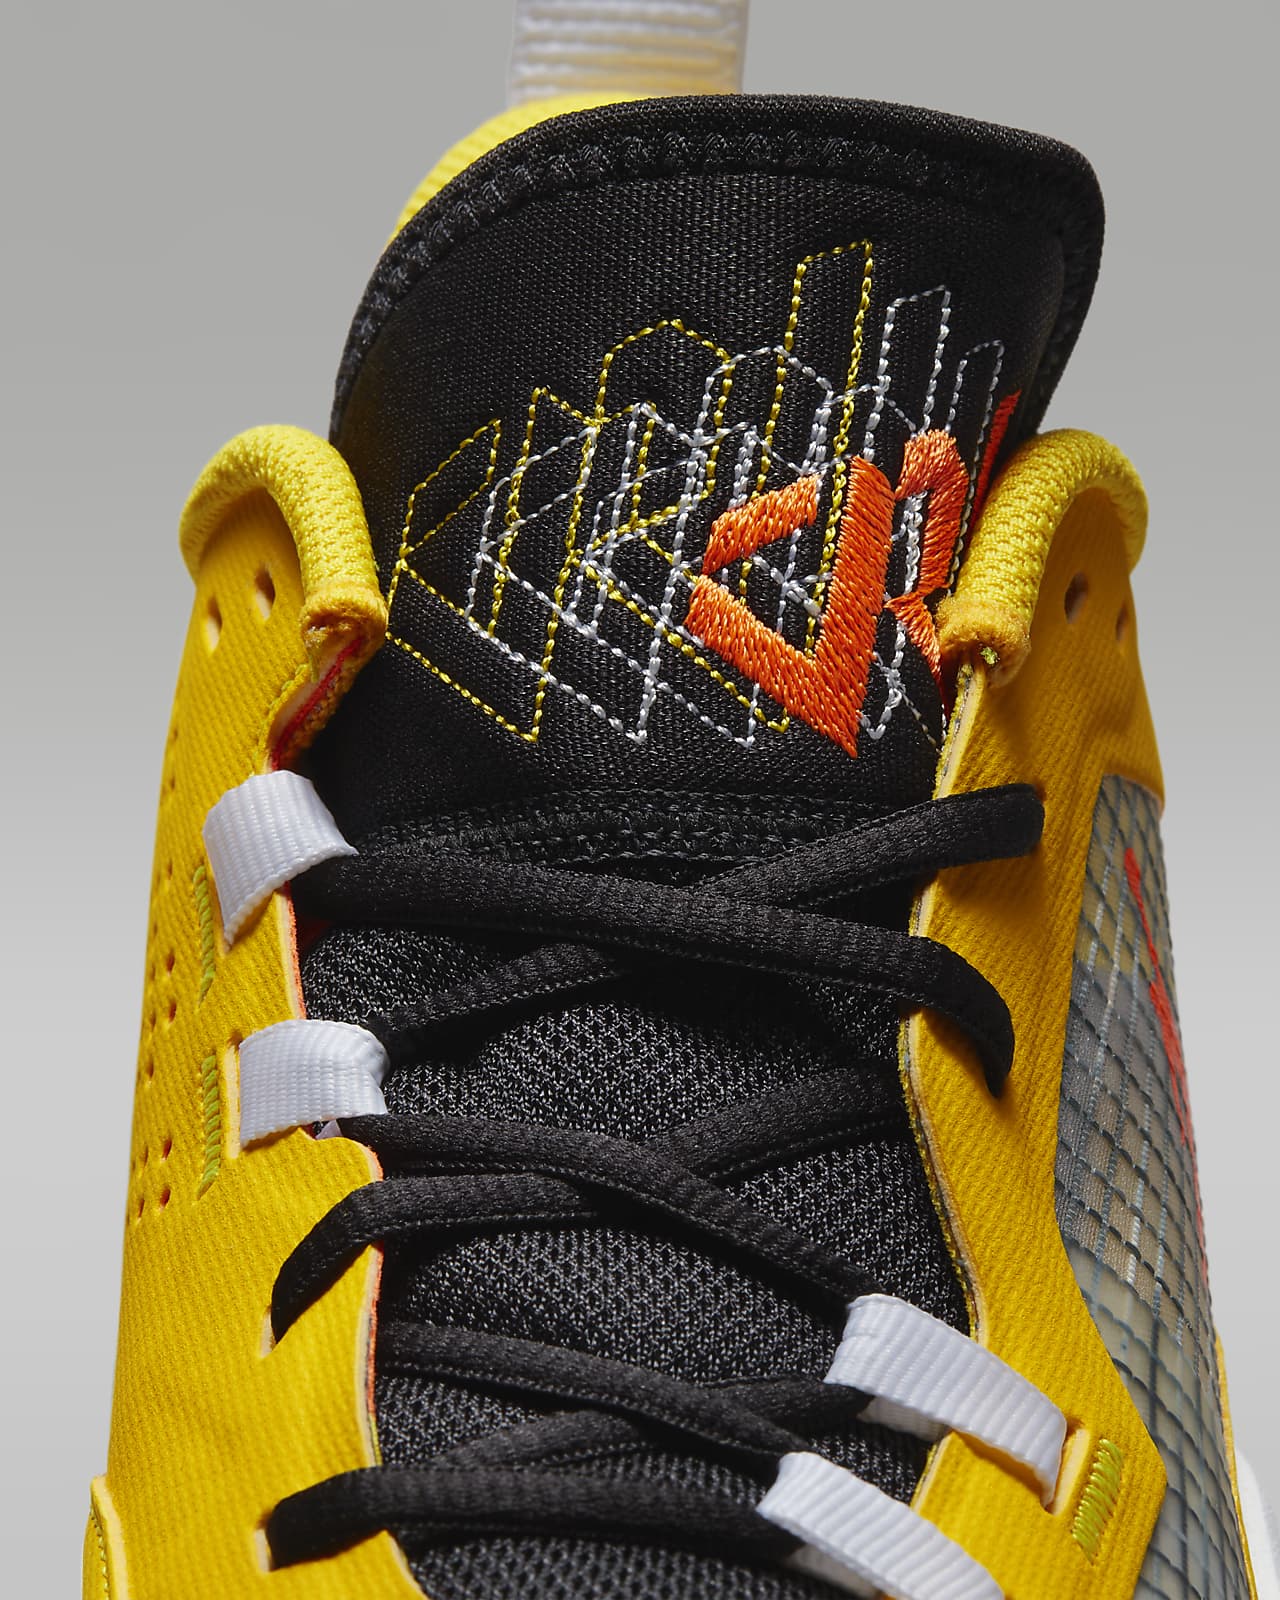 Men's Basketball Shoes. Nike AU